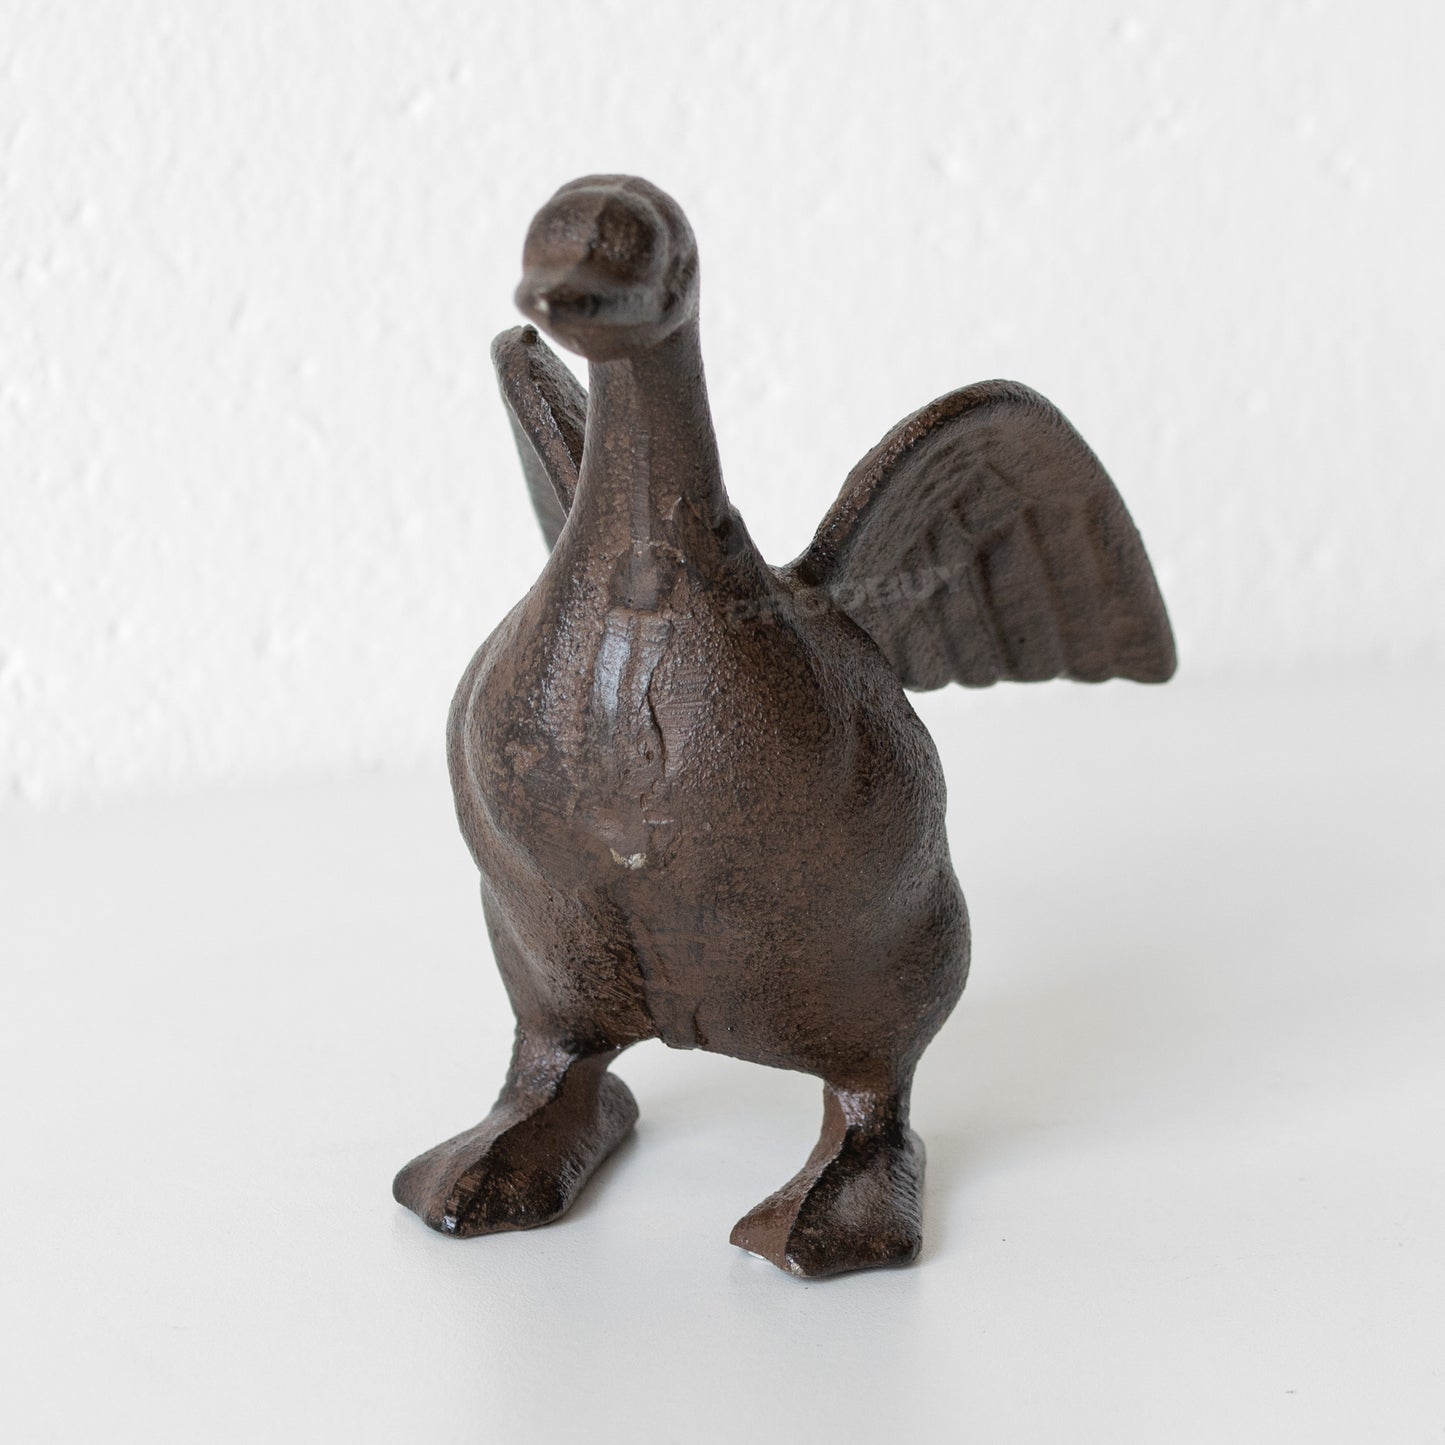 Cast Iron Duck with Wings 14cm Garden Sculpture